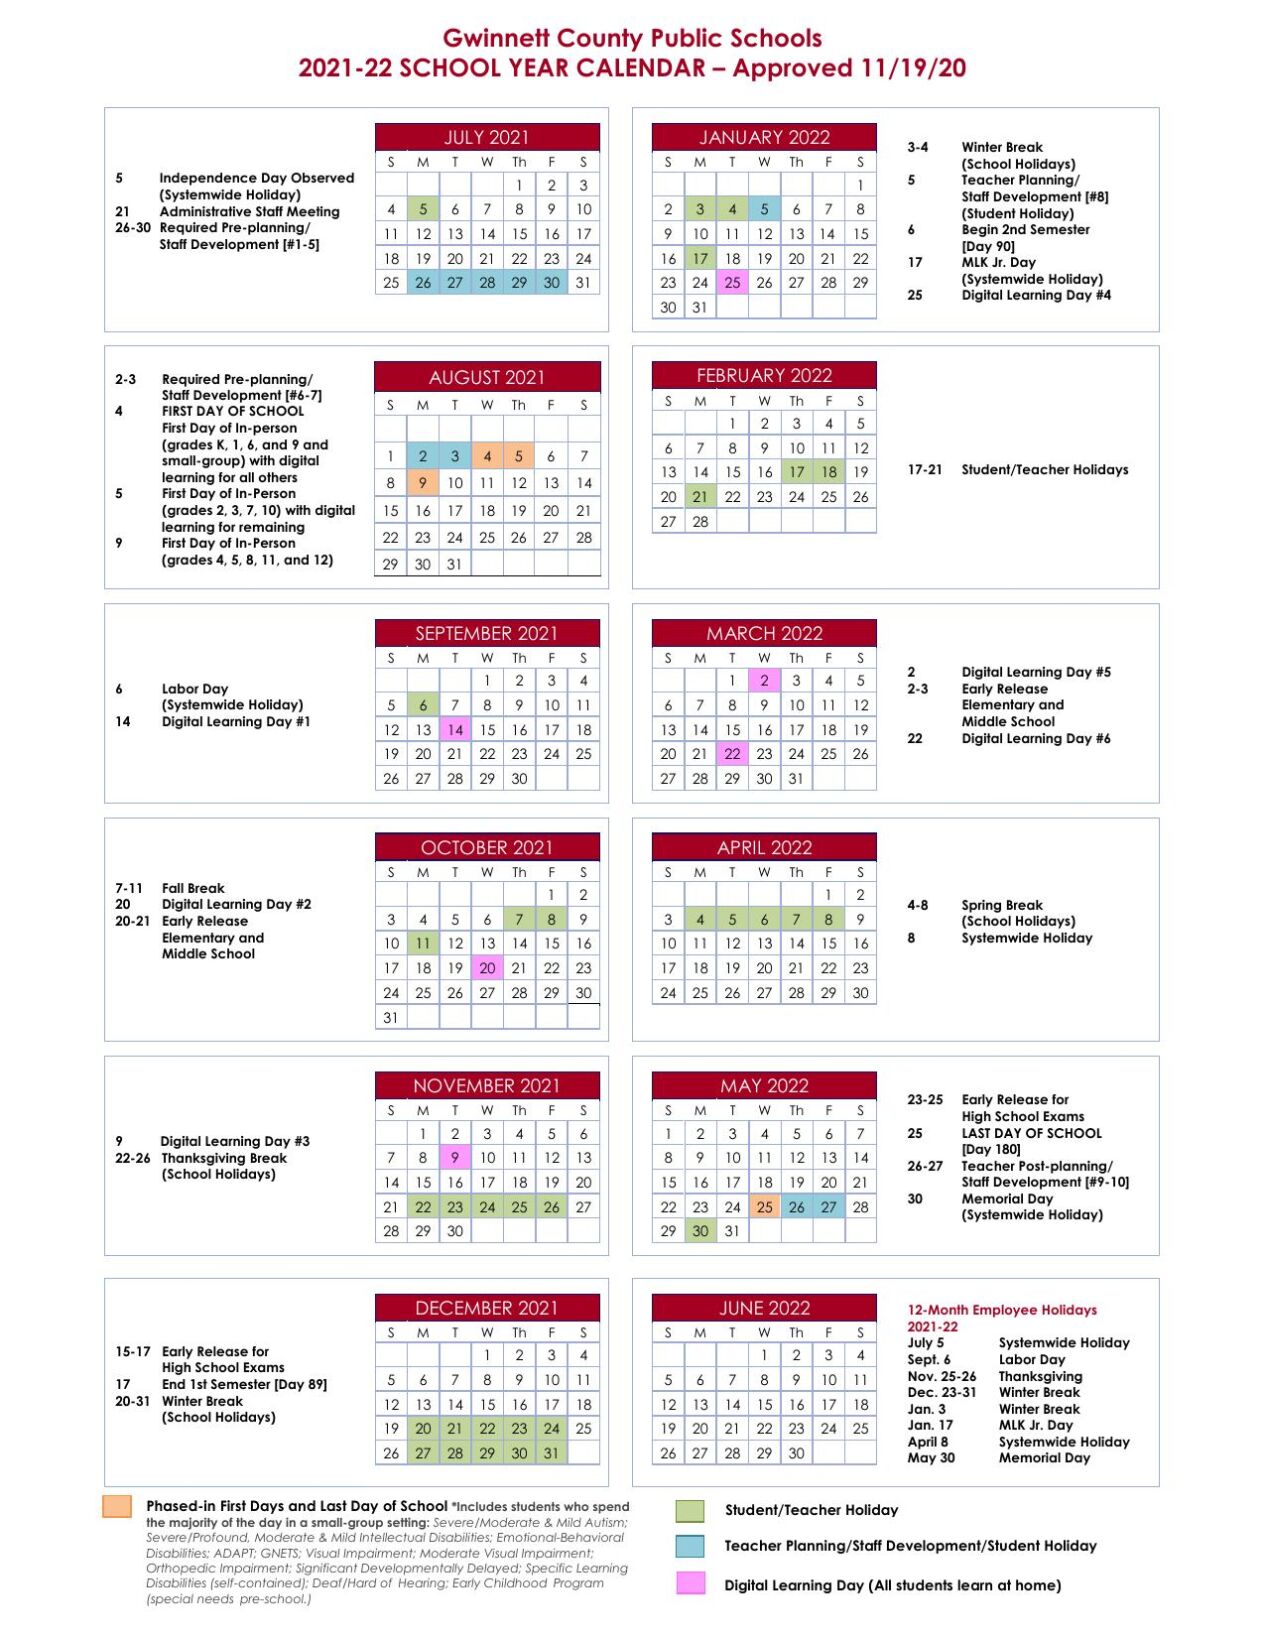 Gwinnett County Public Schools 2021 2022 School Year Calendar 